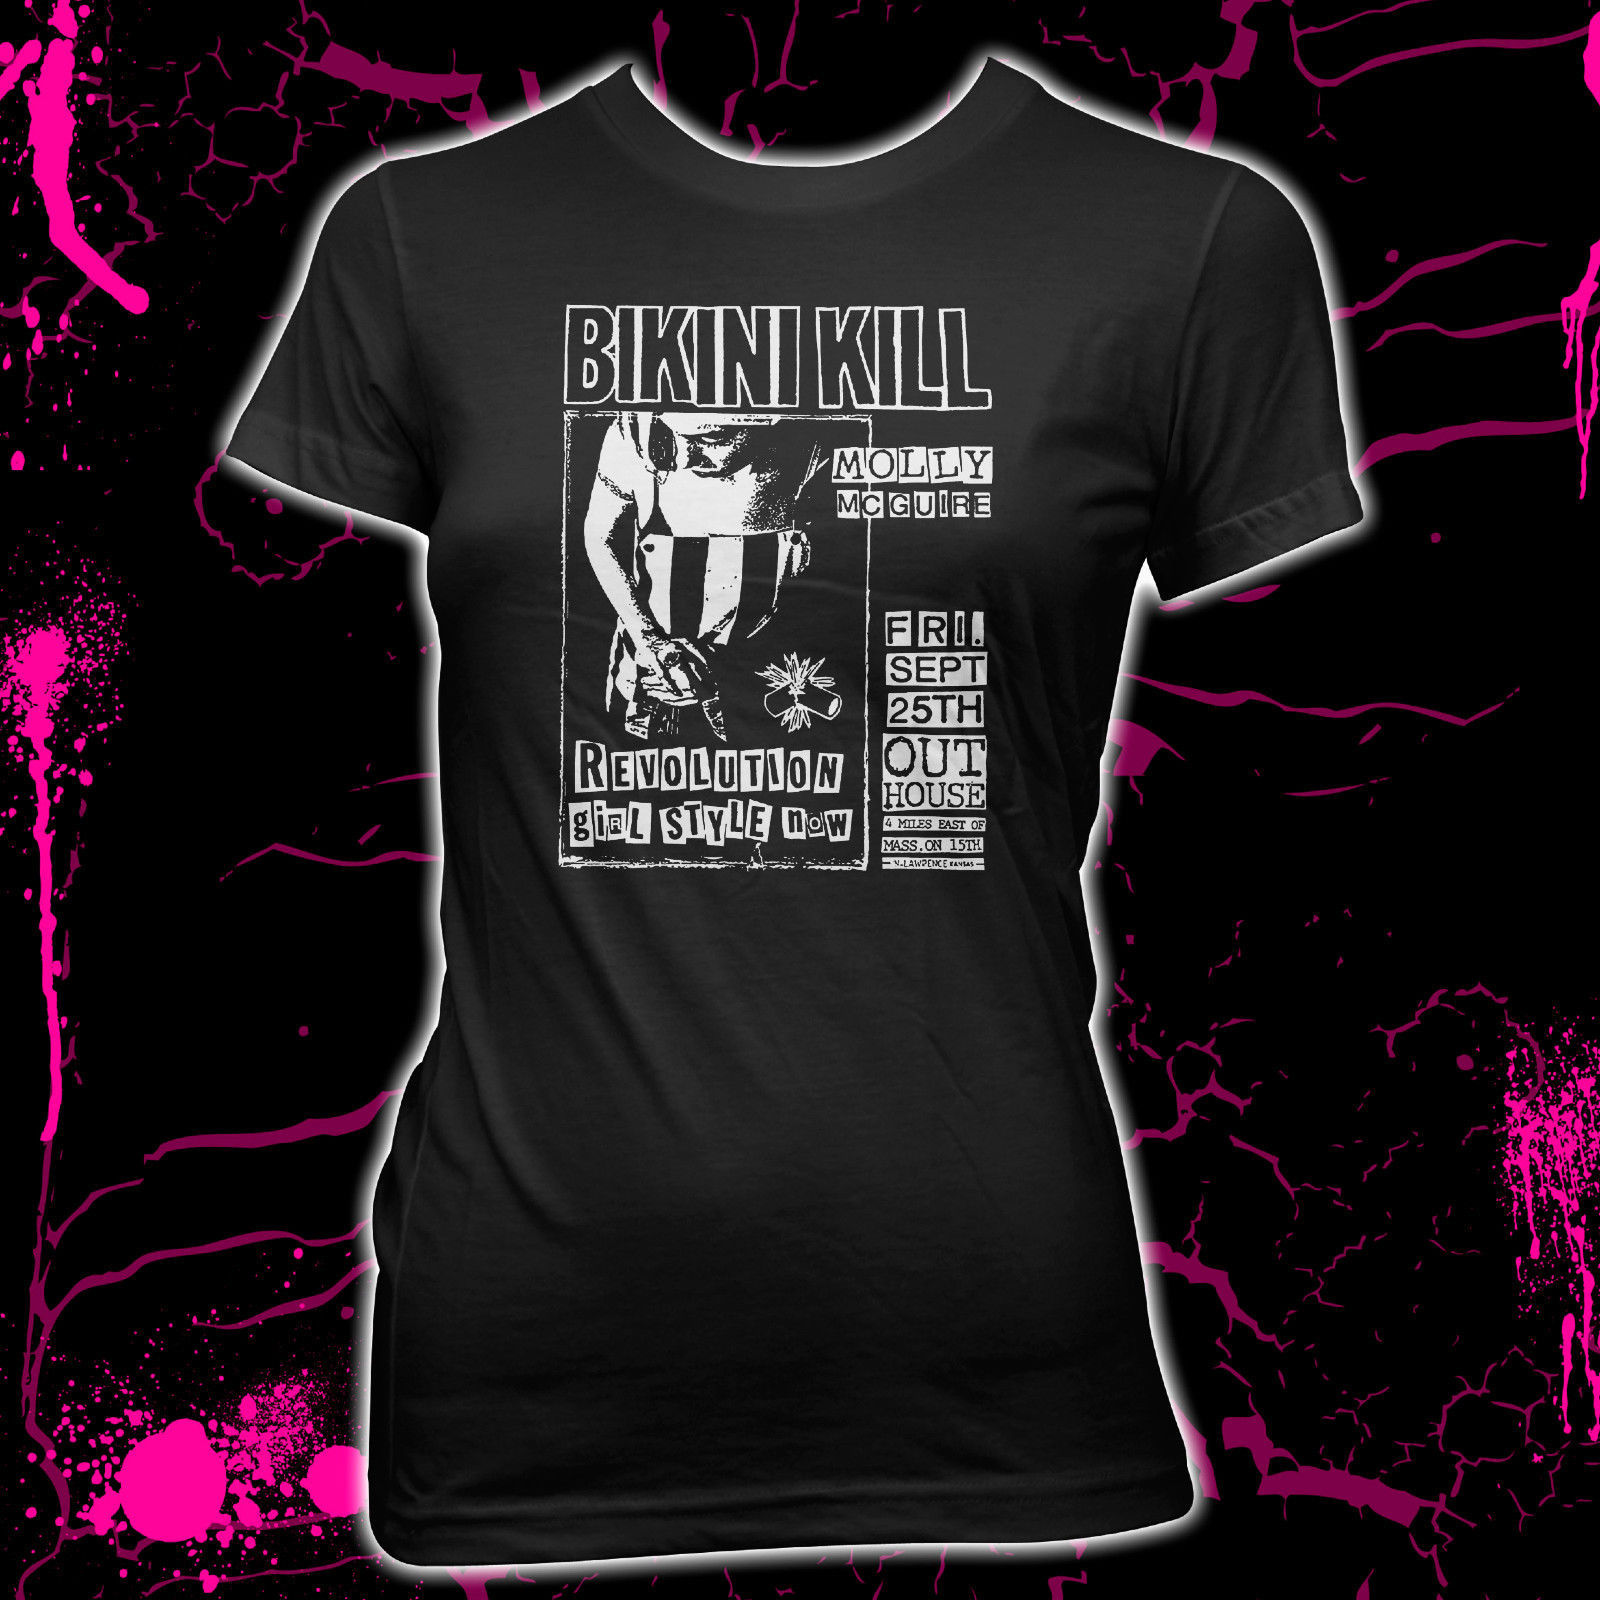 Bikini Kill Flyer -Molly McGuire-Riot Grrl -Women's Hand-screened Cotton T-shirt